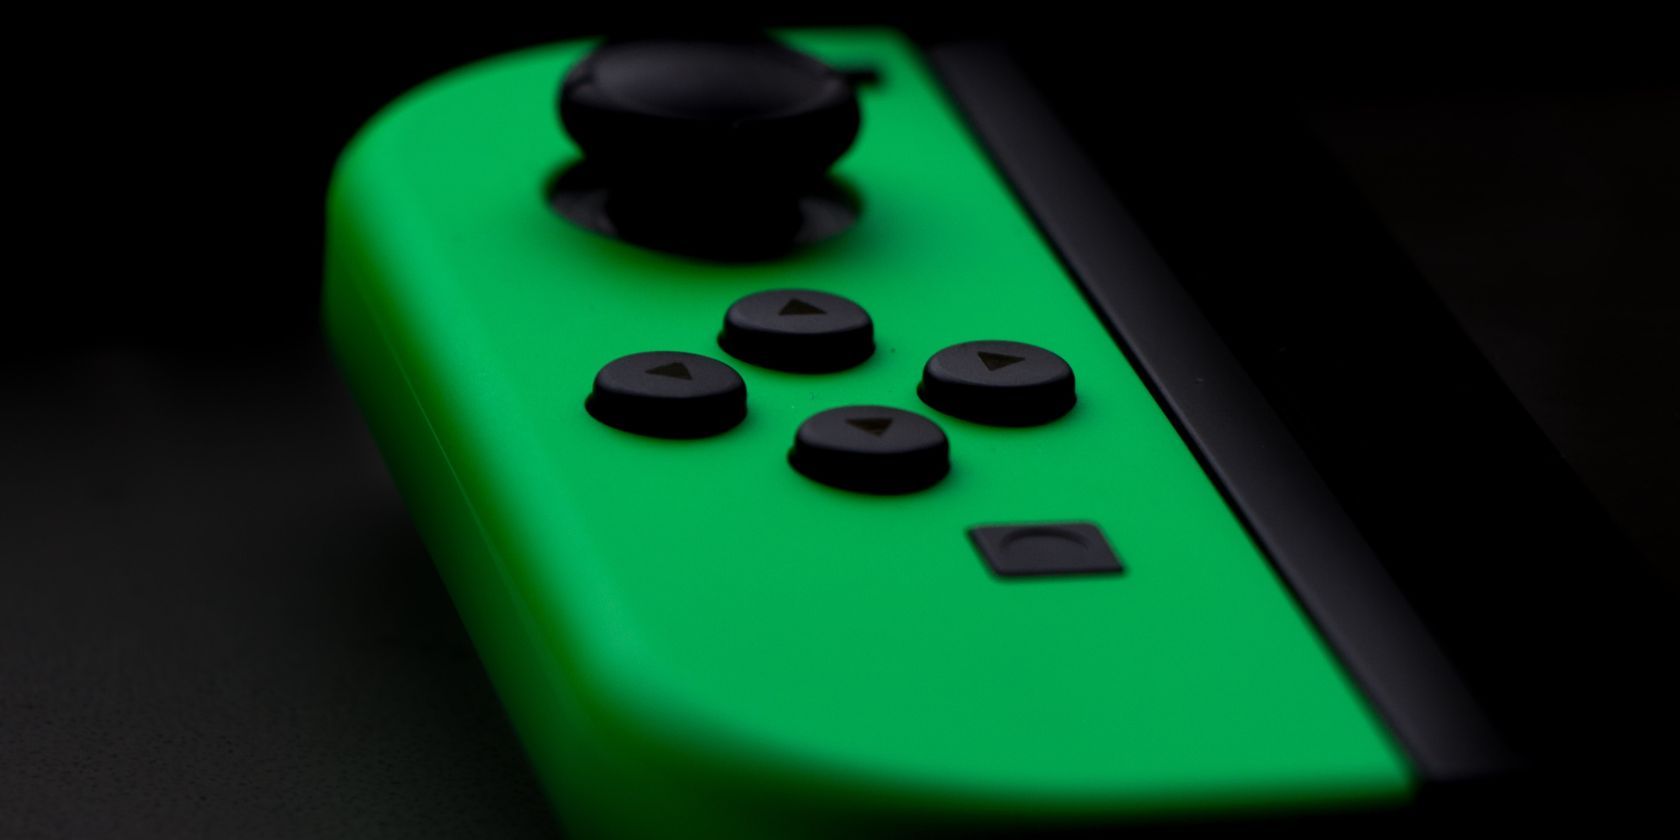 Close up of neon green Nintendo Switch joy con